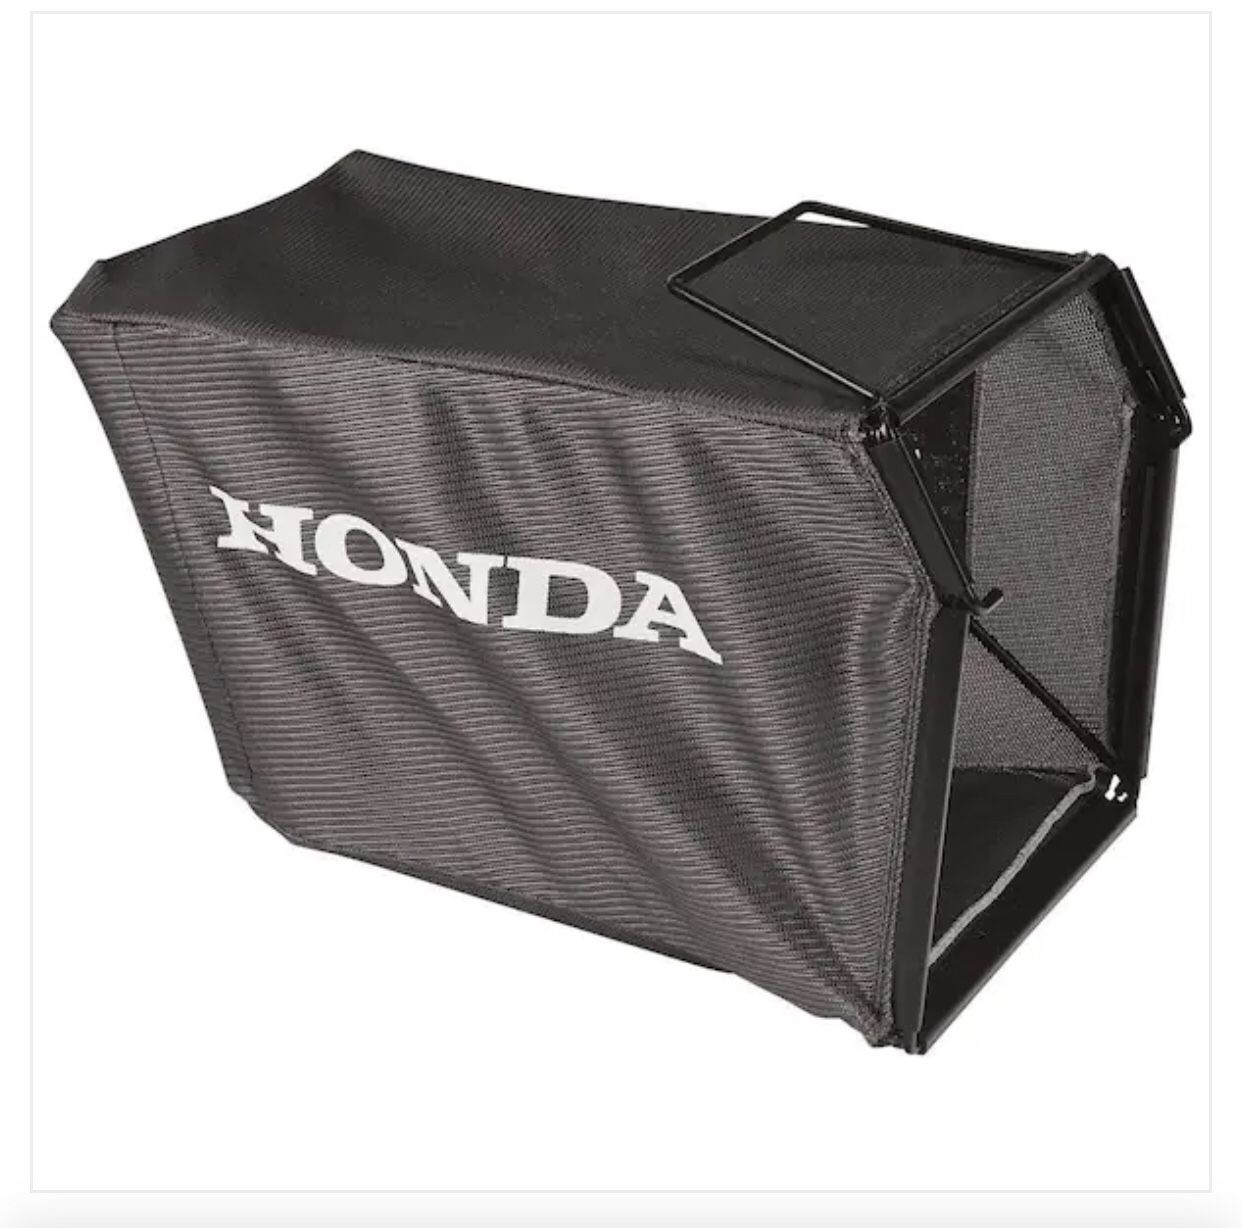 Honda Fabric Grass Bag for HRR Series Mower with frame